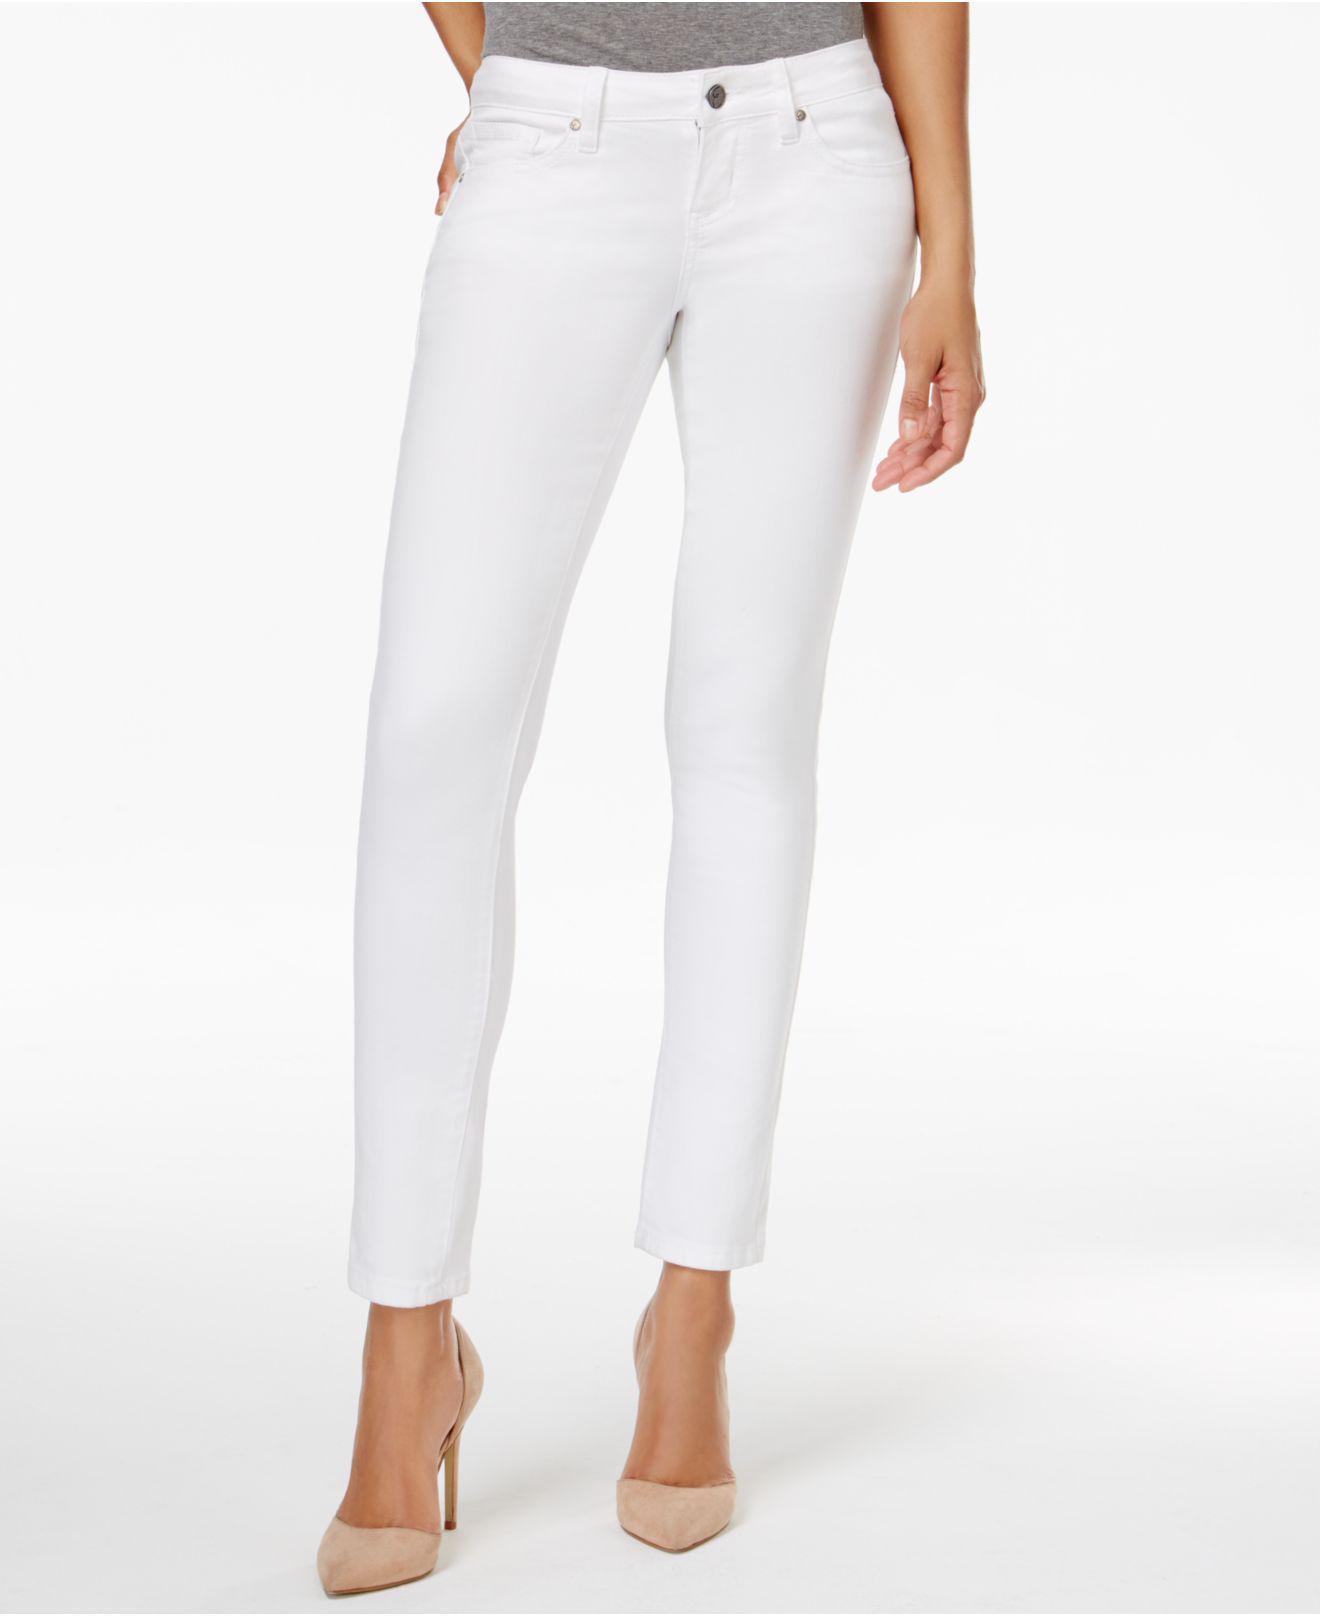 Earl Jean Skinny Ankle Jeans in White